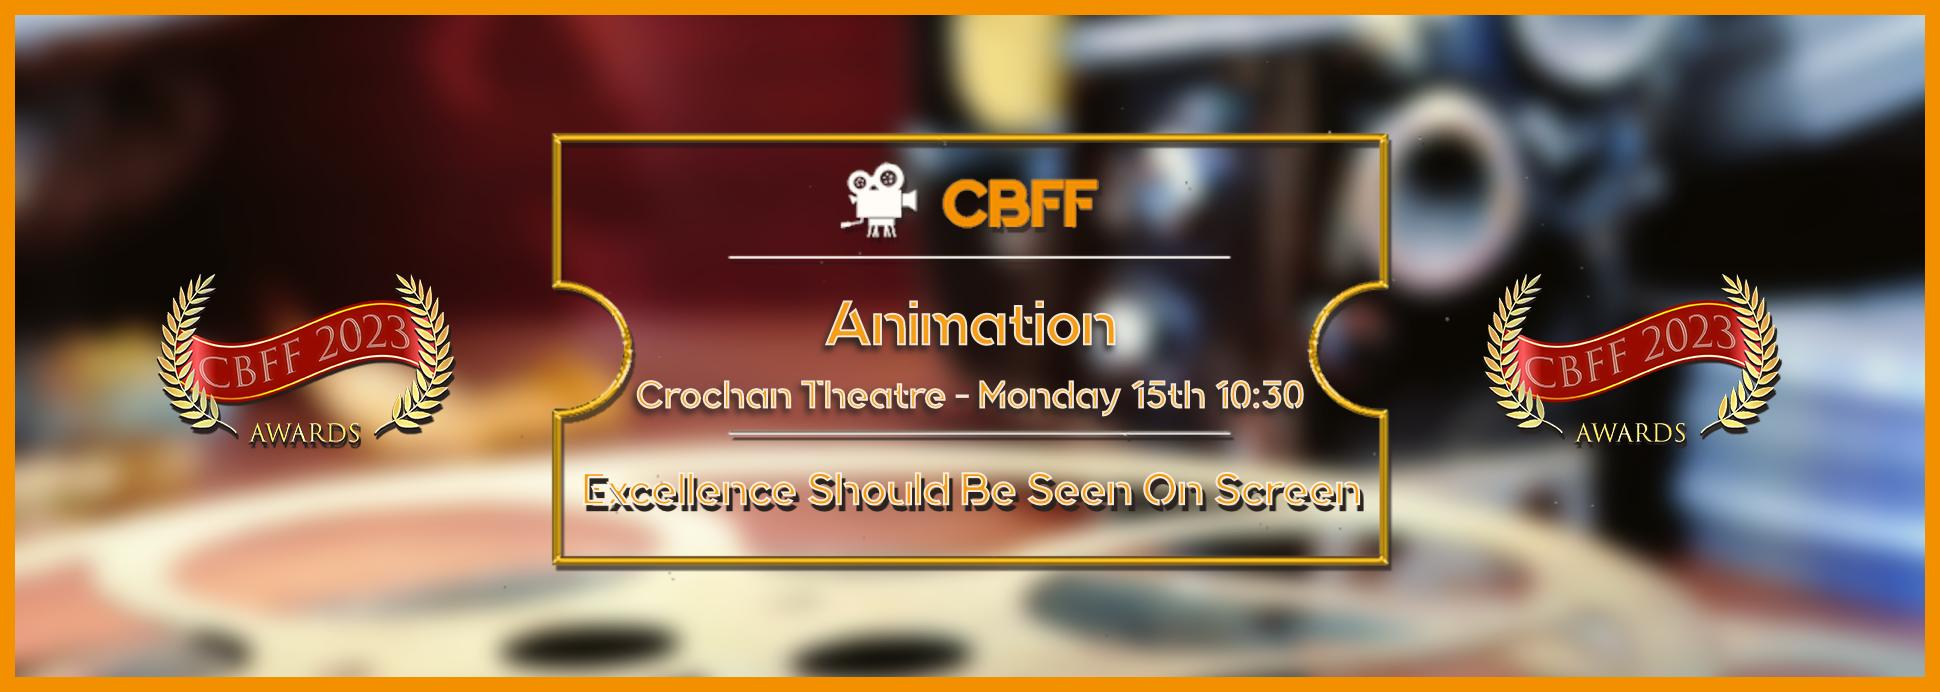 Crochan Animation 15th 10:30